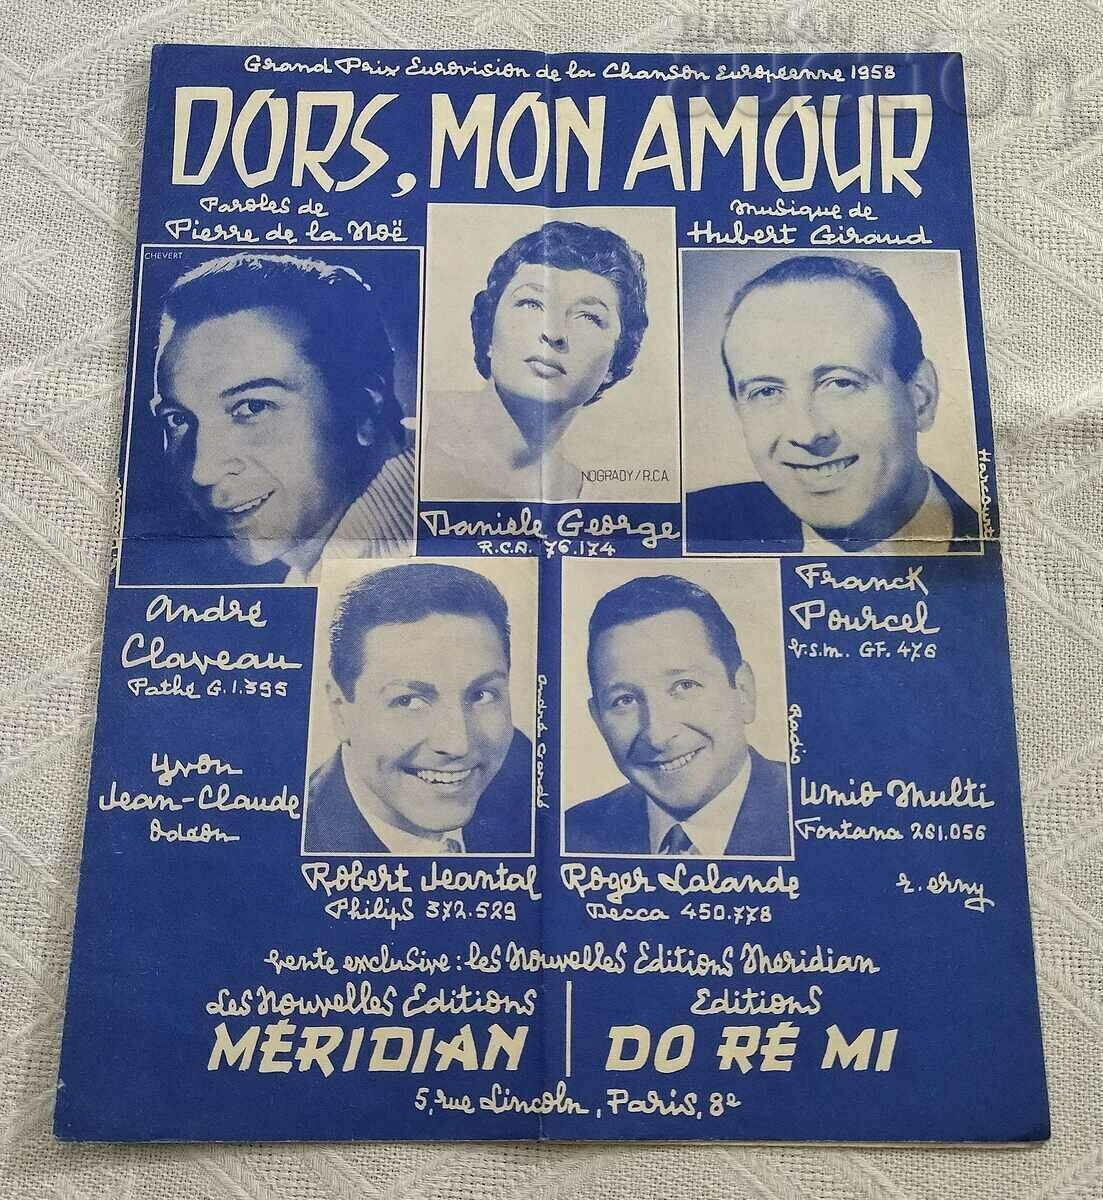 ВАЛС "DORS, MON AMOUR" НОТИ 1958 г.